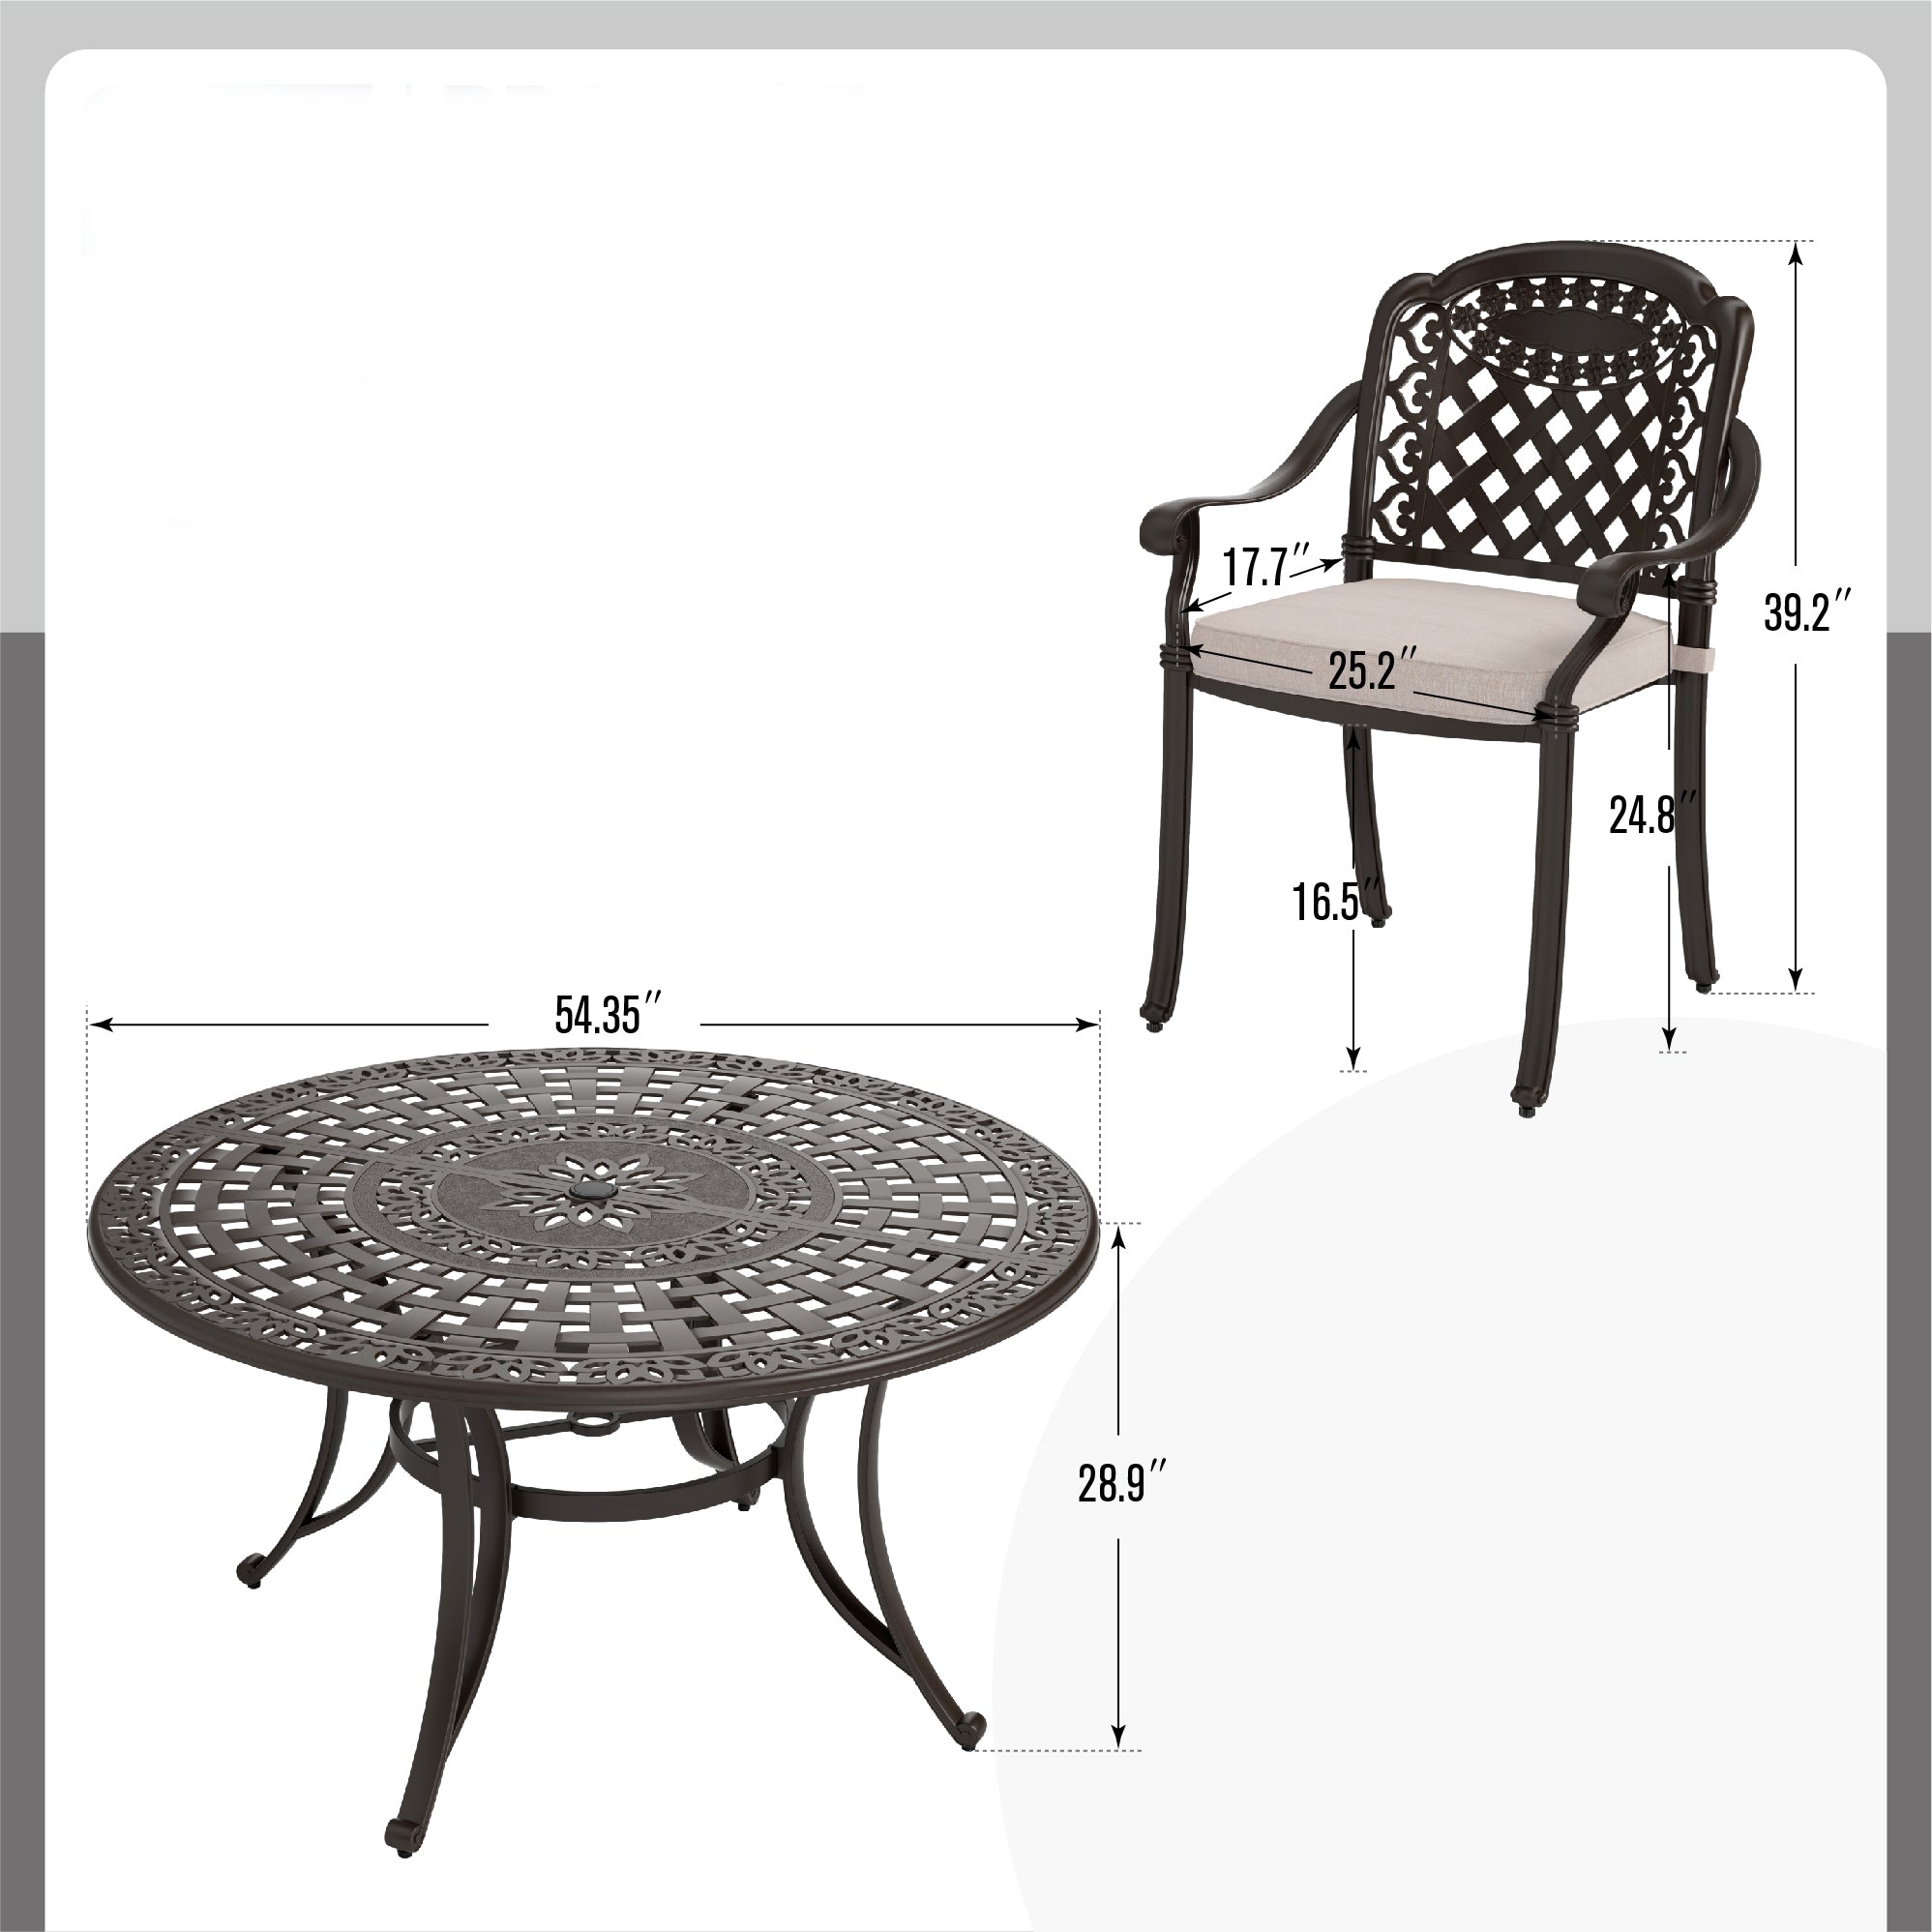 PHI VILLA 7-Piece Cast Aluminum Sunflower Fixed Chairs Patio Dining Sets